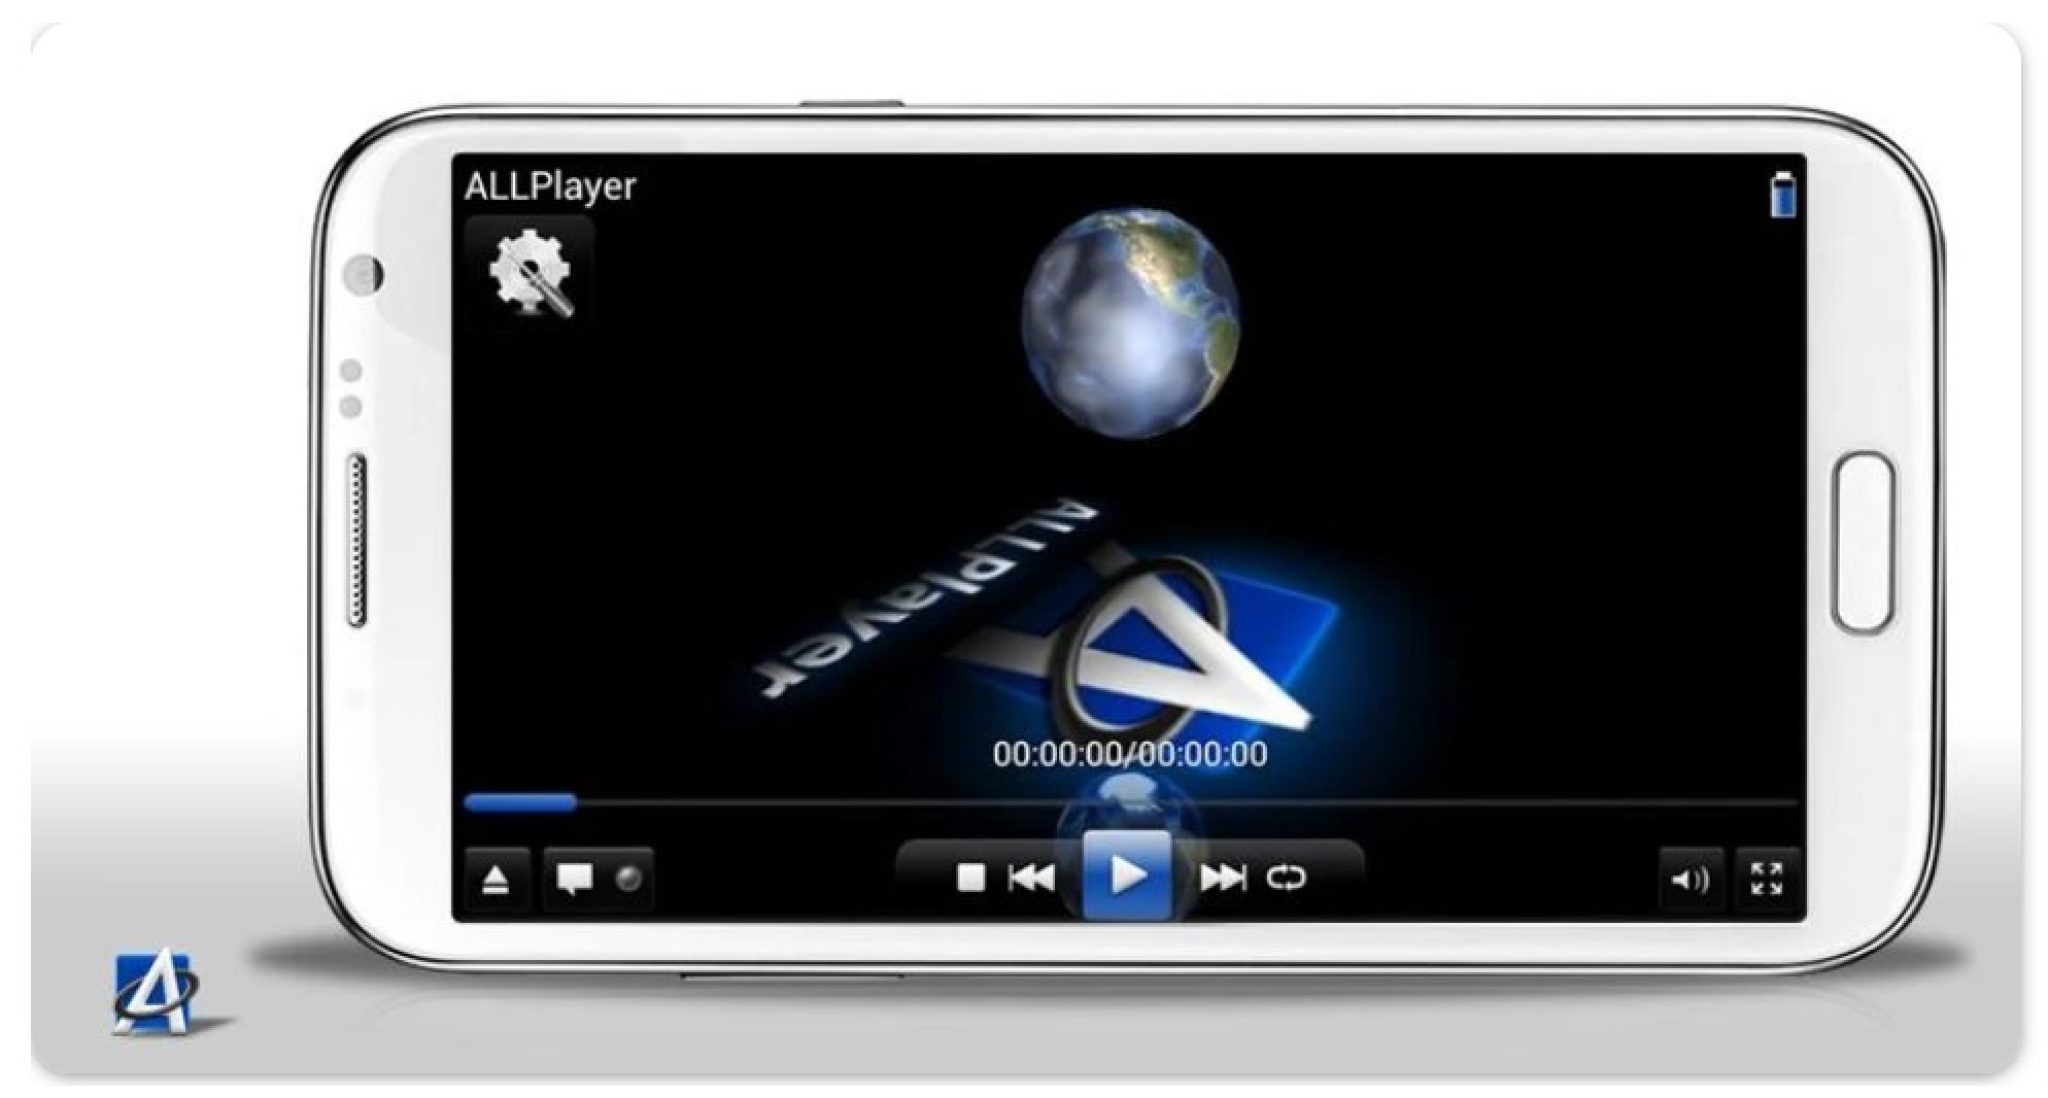 Google video player. ALLPLAYER. Скриншоты ALLPLAYER. Видеопроигрыватель дляандройда8. 1.0. تحميل مشغل فيديو HD مجاناا.